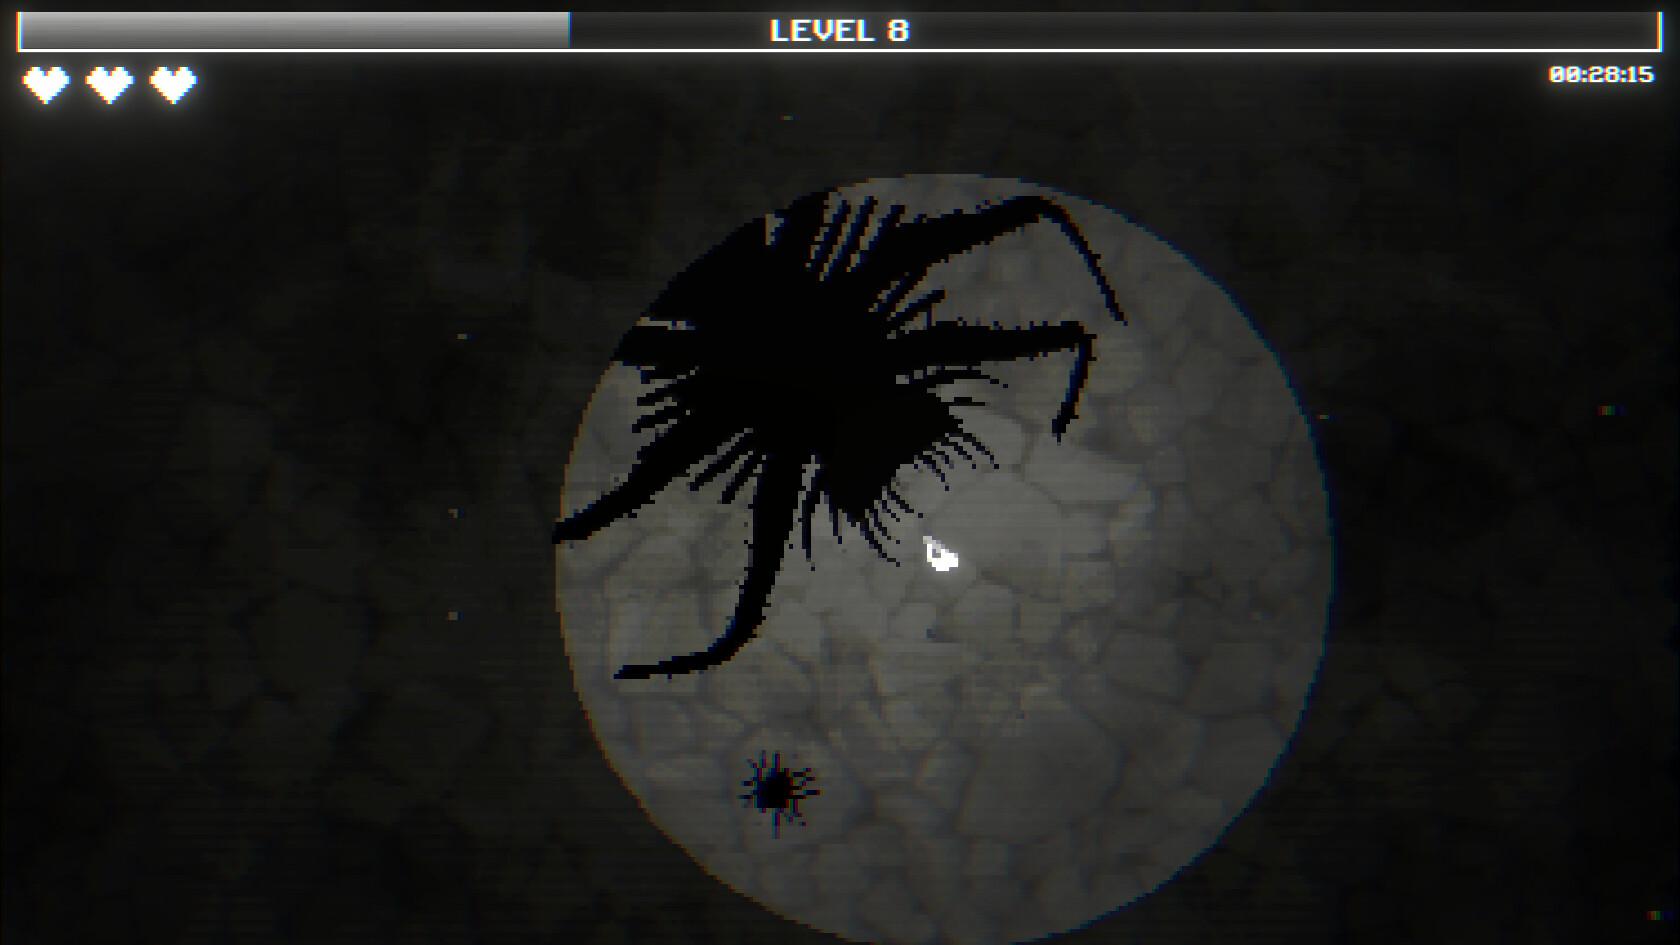 Screenshot №6 from game Disfigure